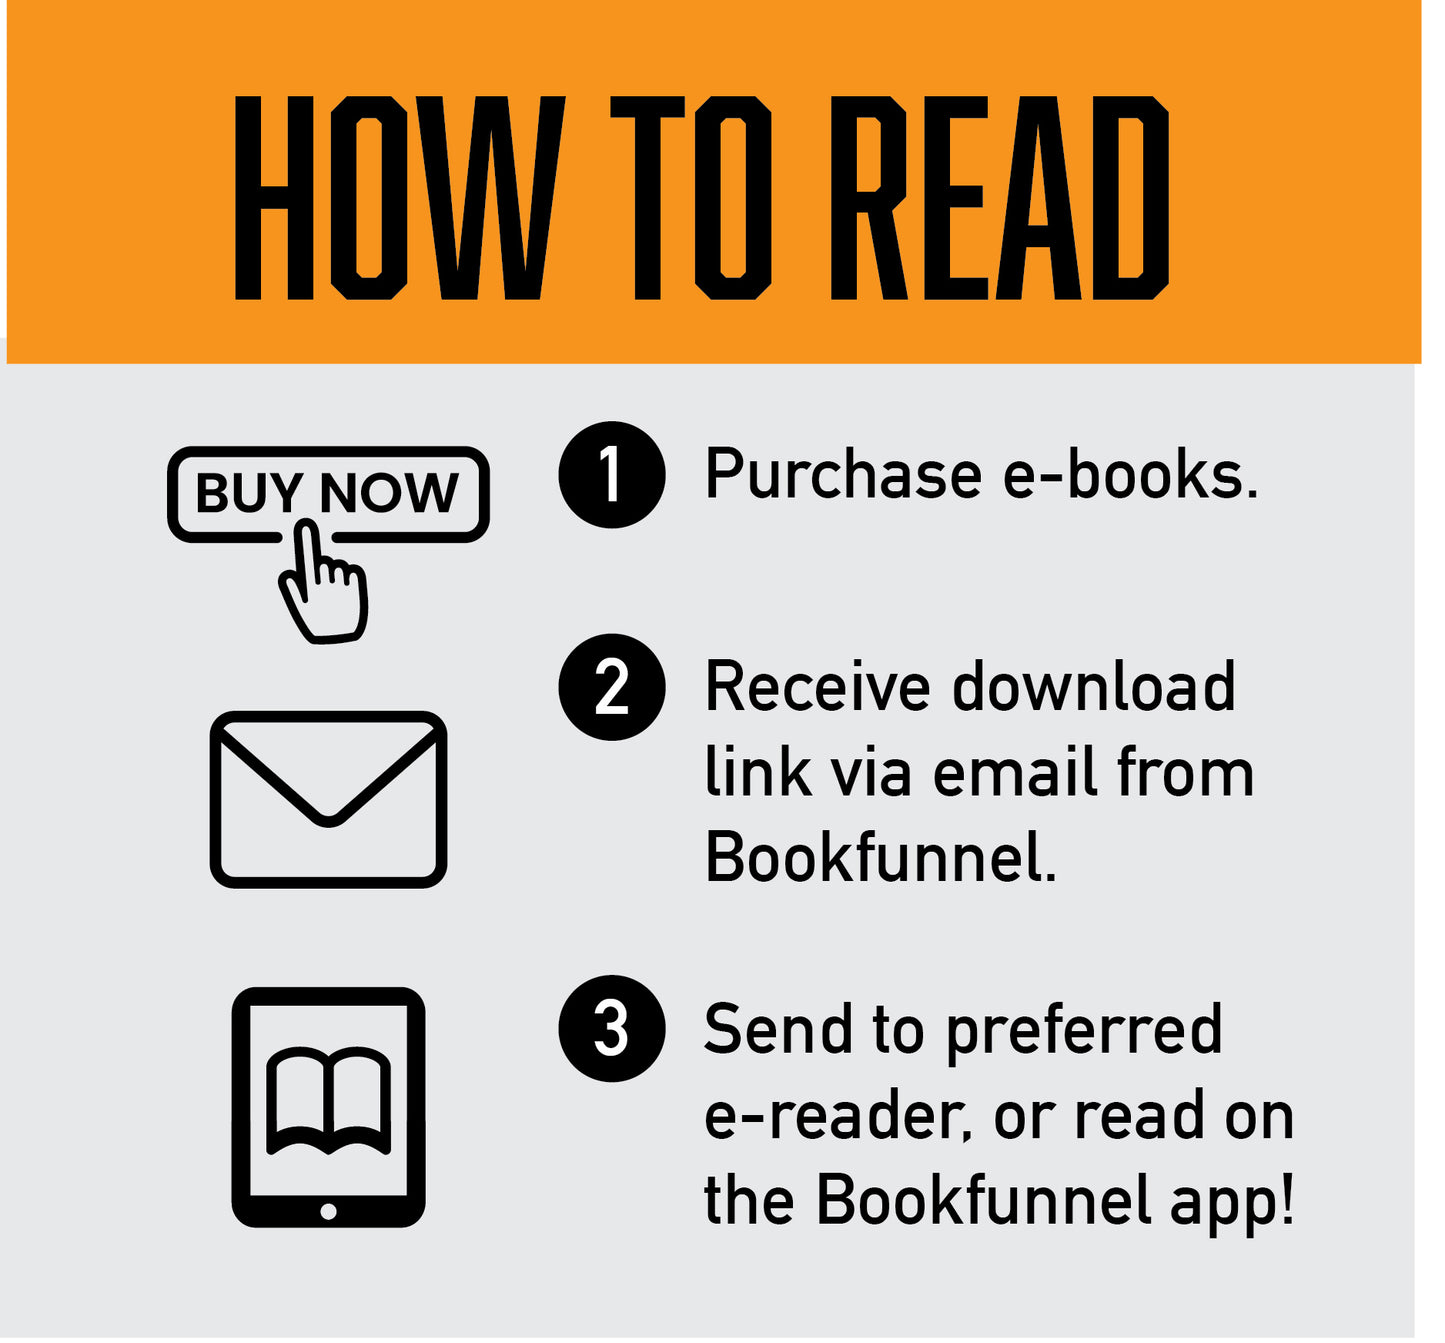 Junkers - Book 1 (Kindle and ePub)